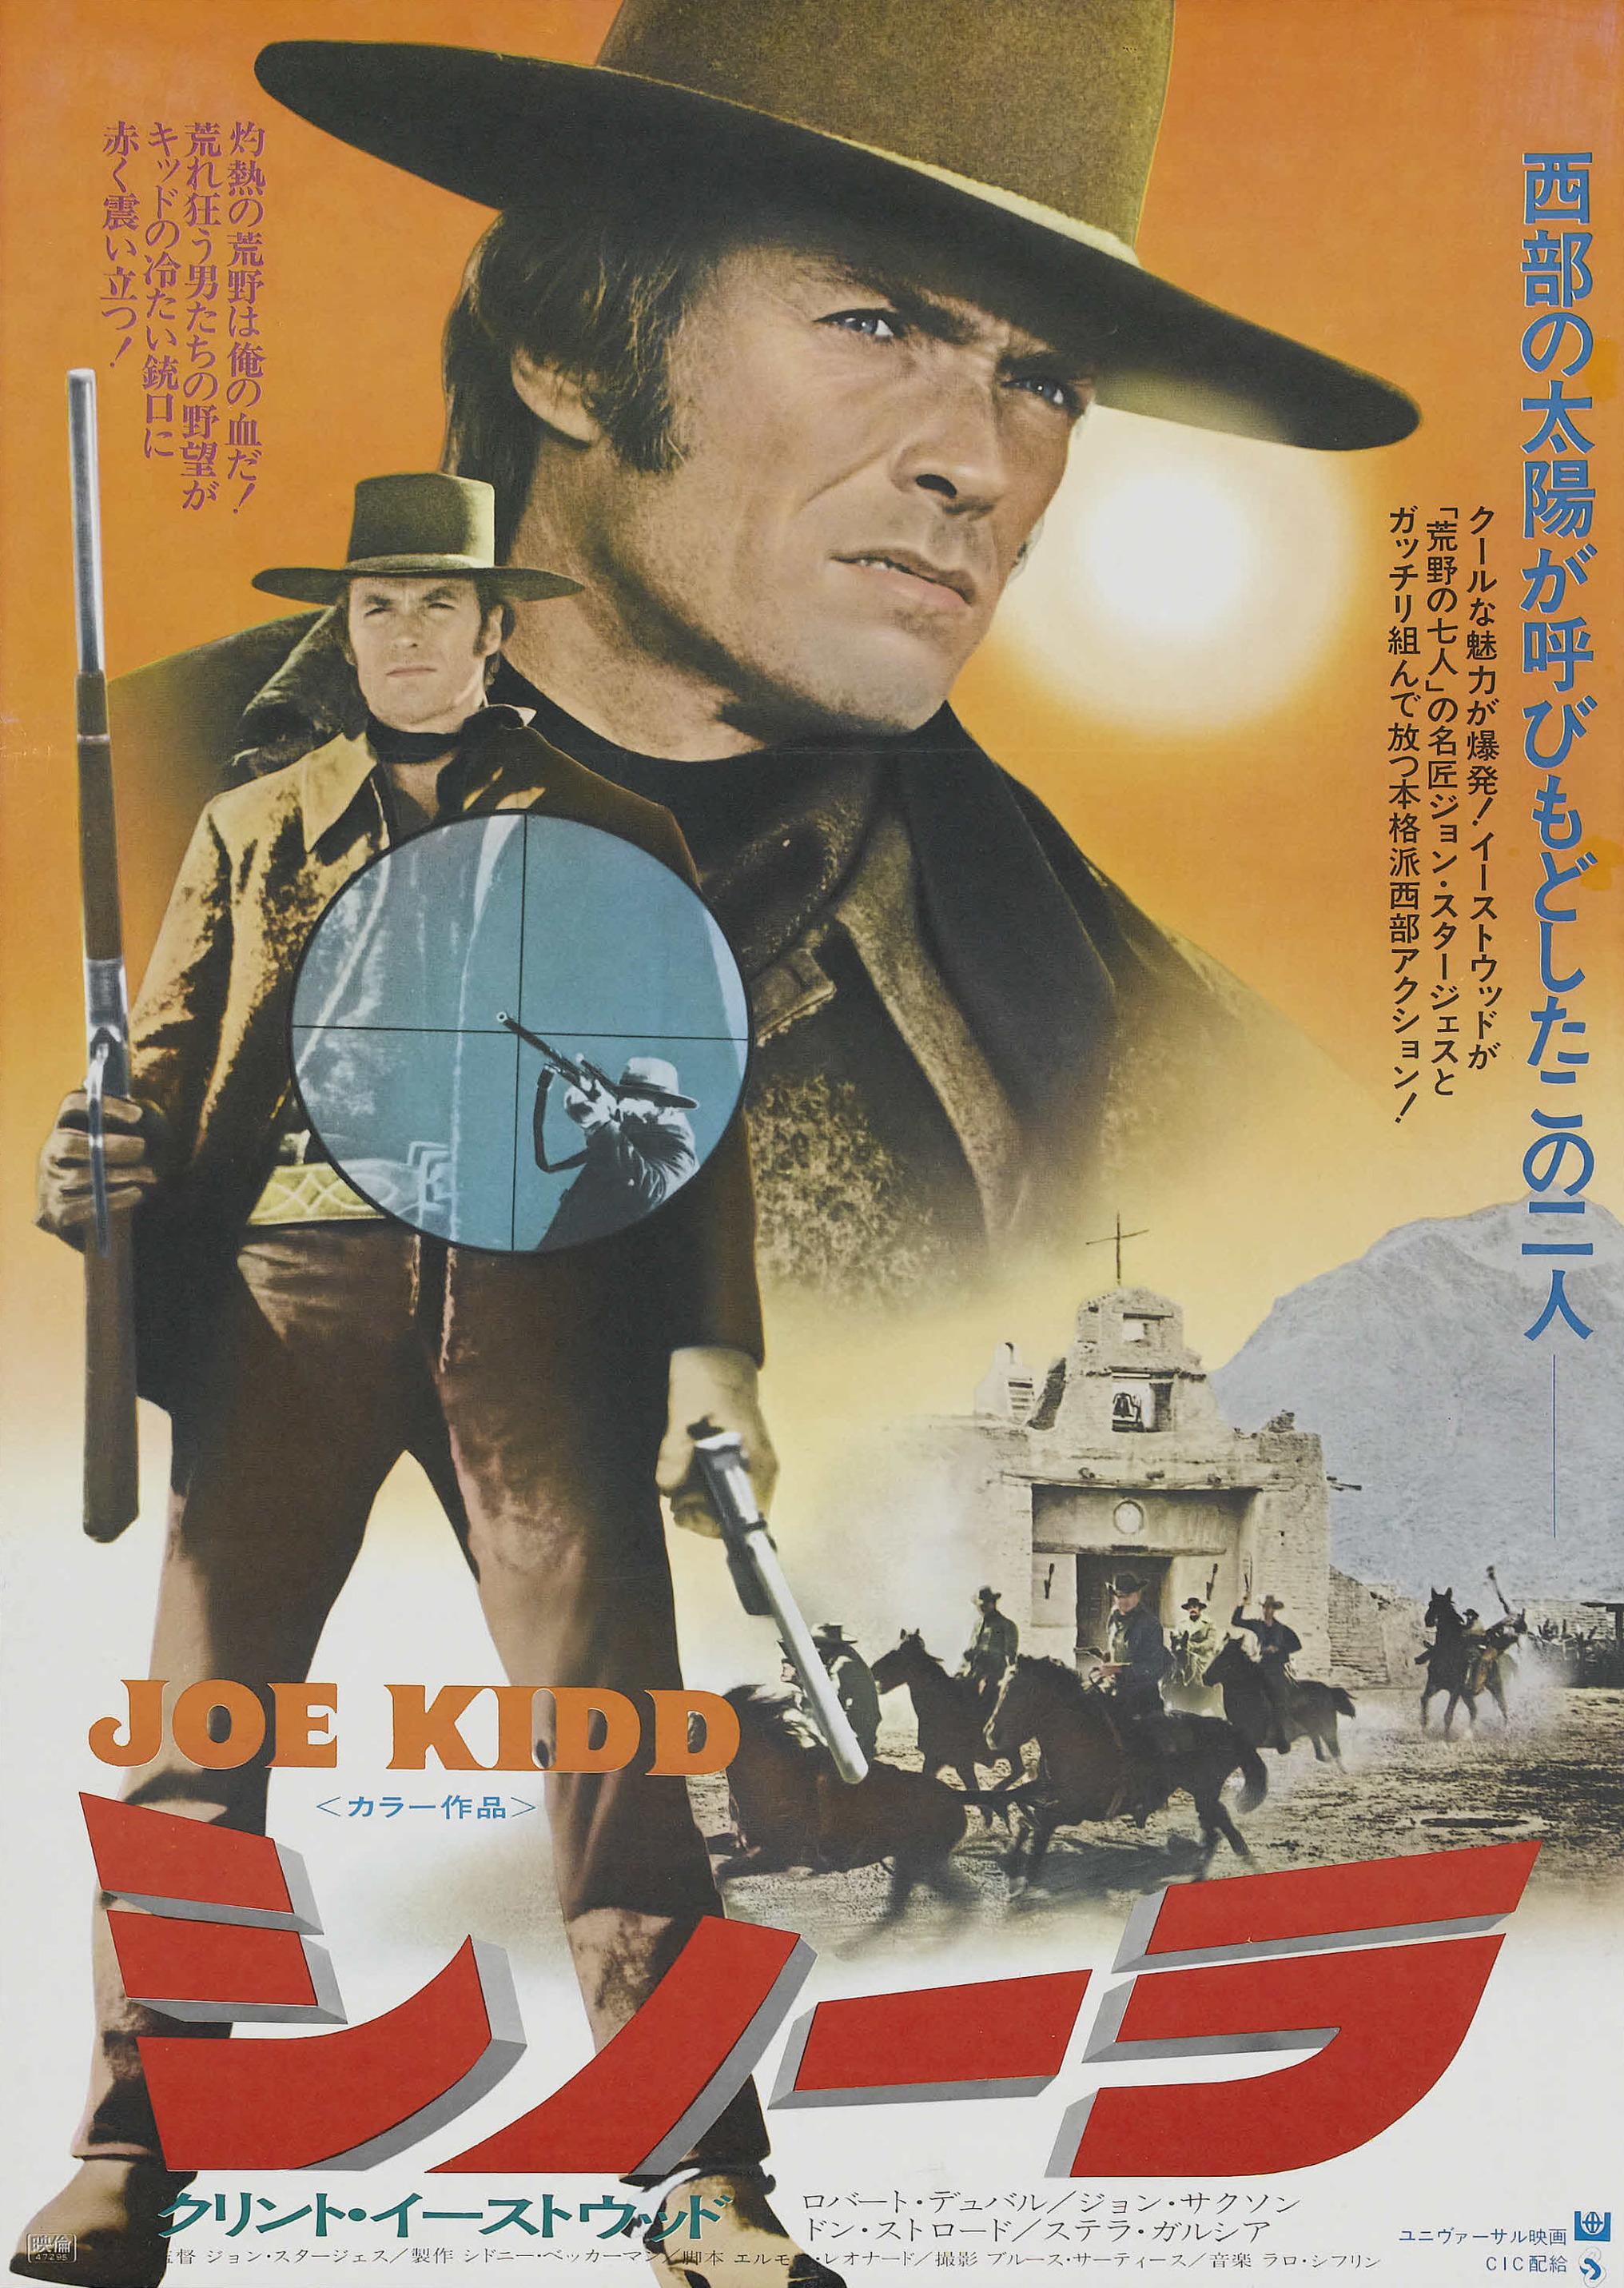 Mega Sized Movie Poster Image for Joe Kidd (#2 of 5)